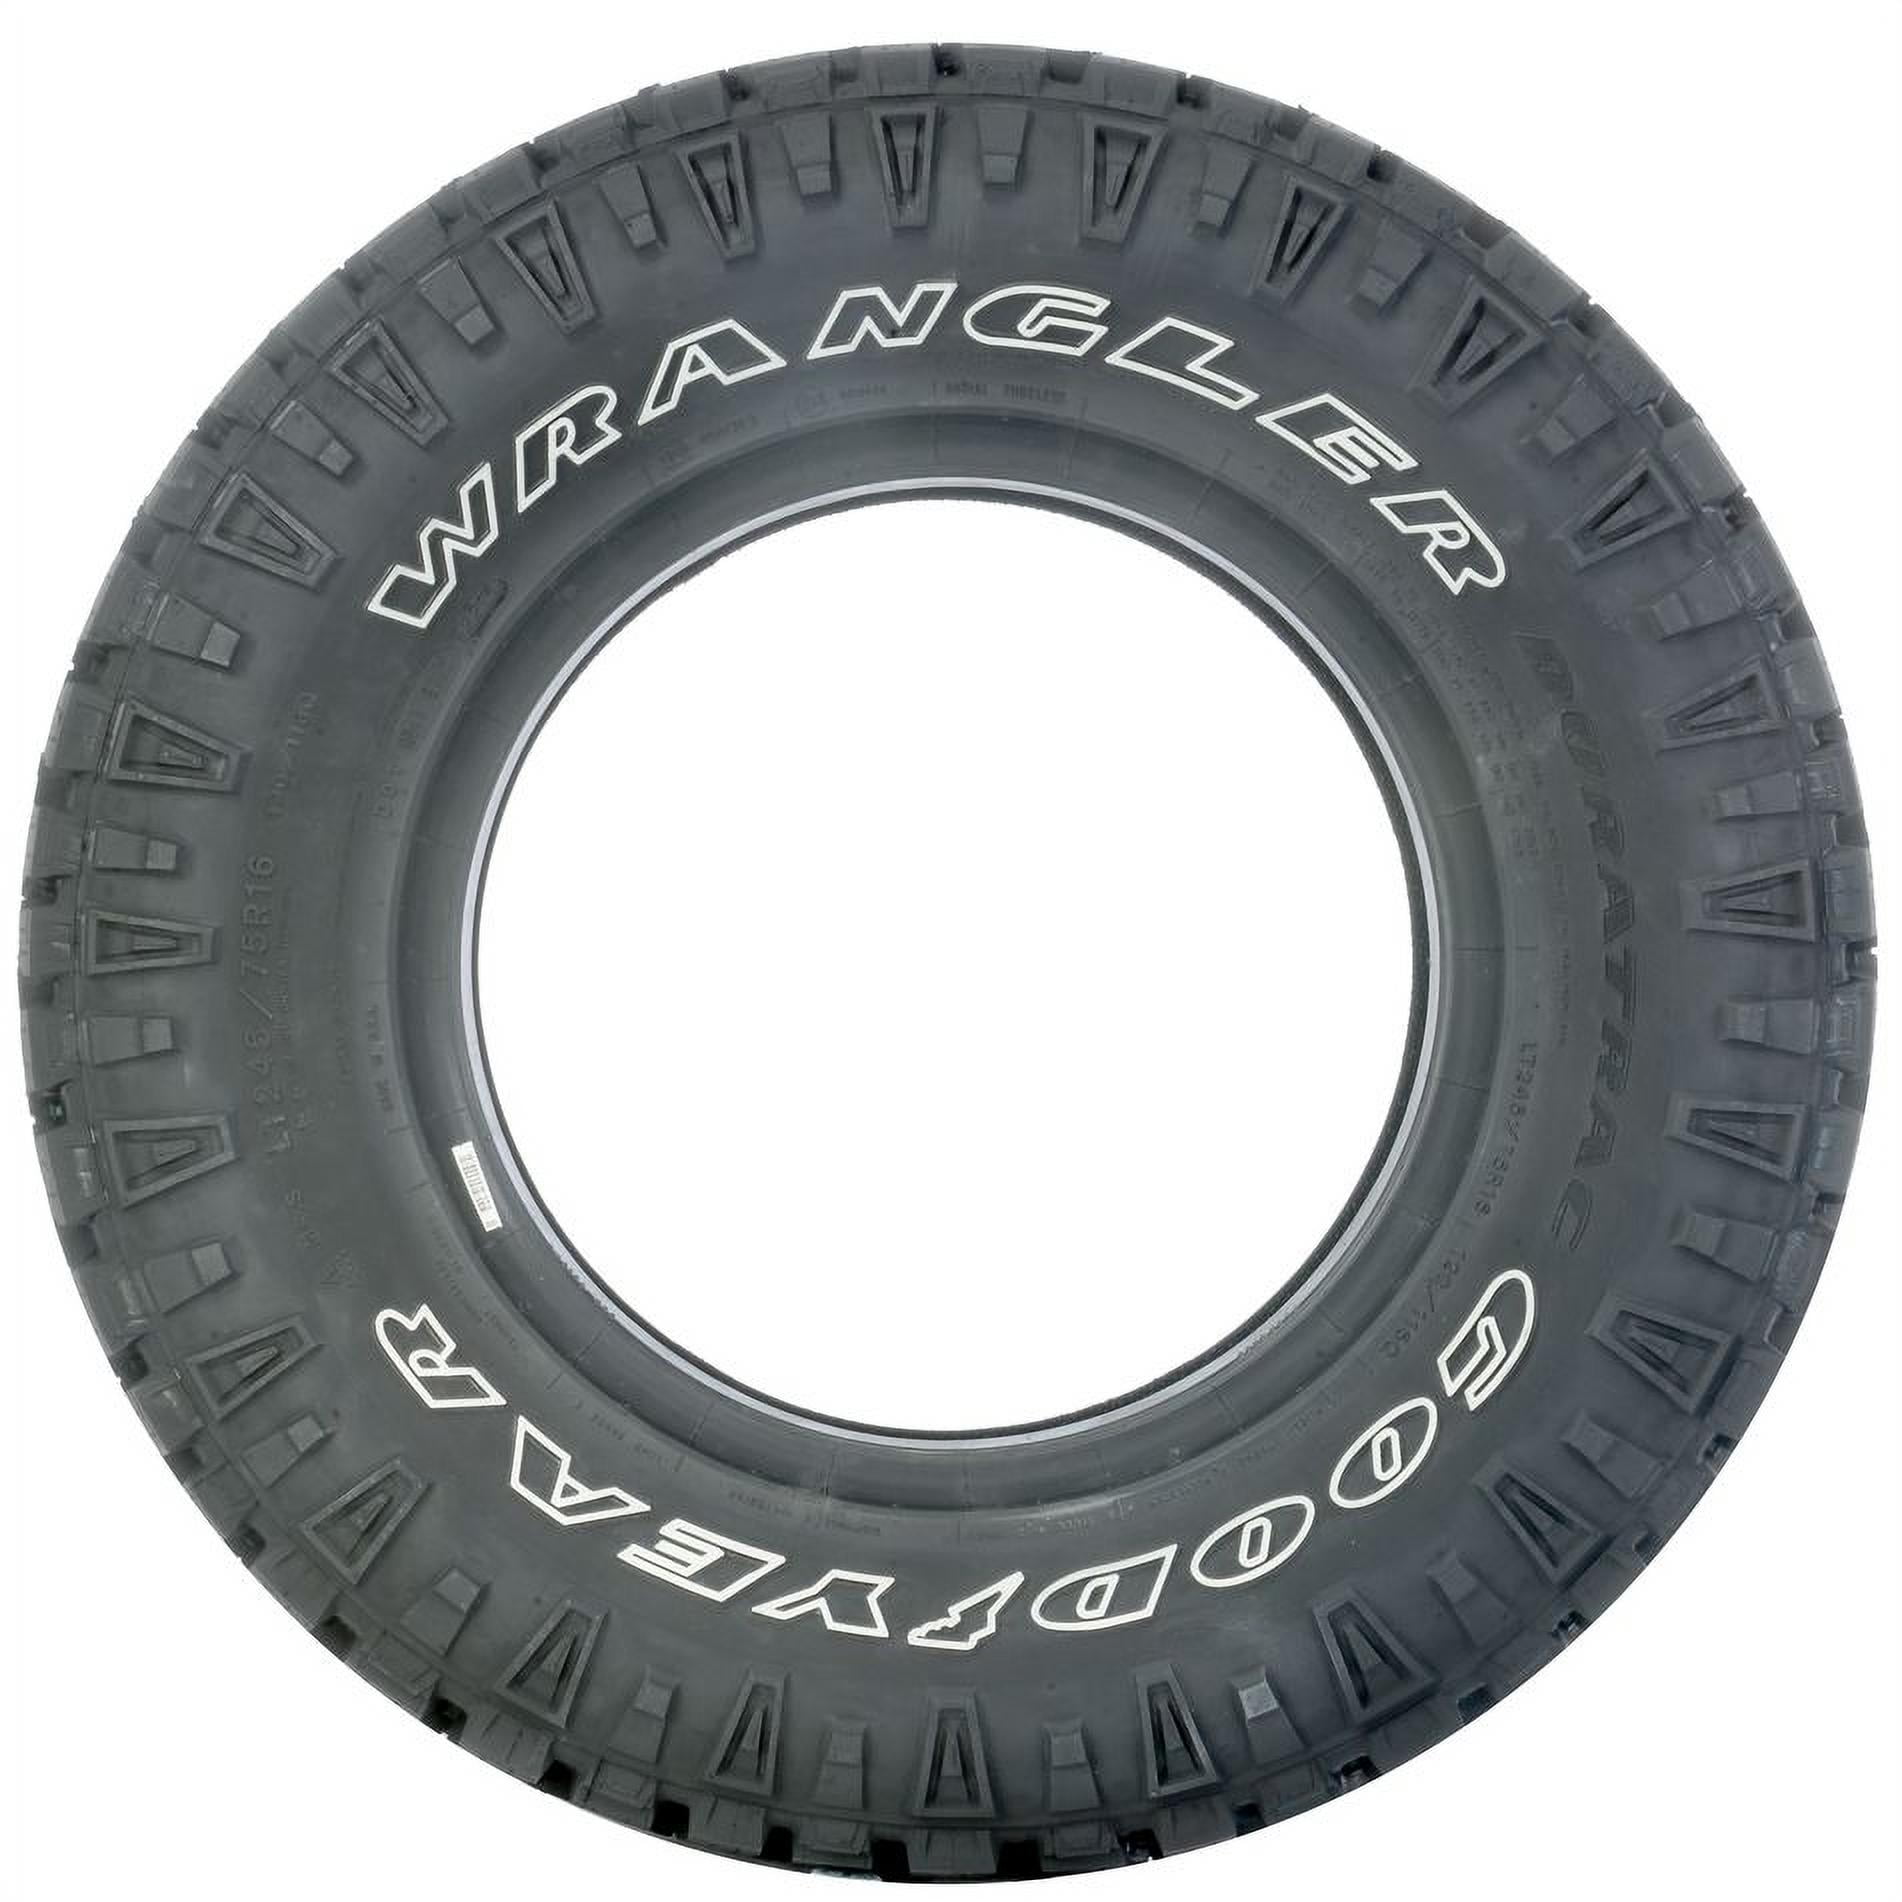 Goodyear wrangler duratrac LT295/70-18 129Q bsw all-season tire -  